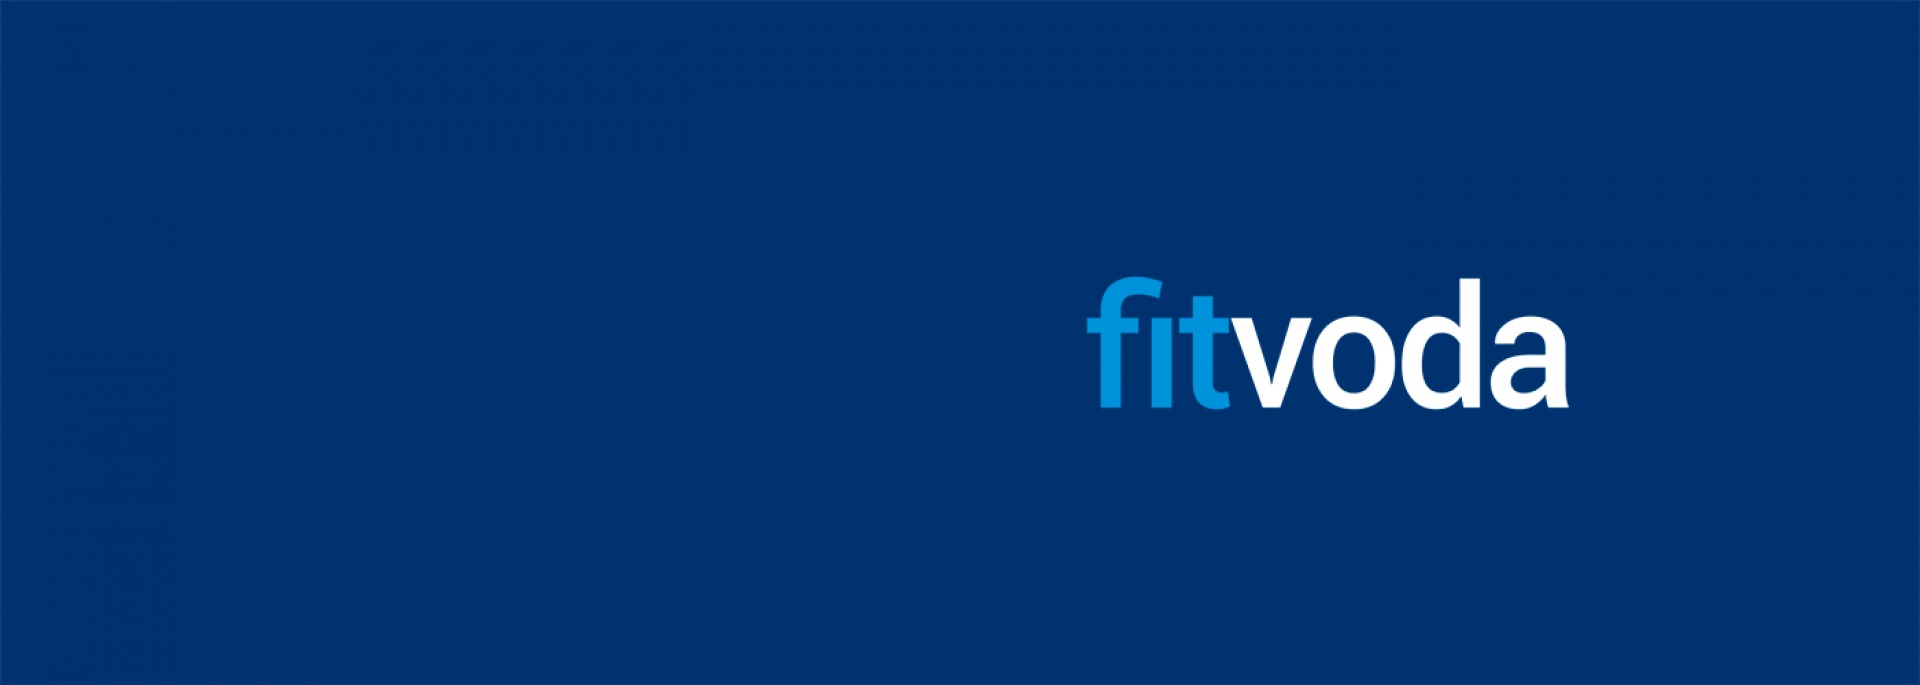 FitVoda Corporate identity